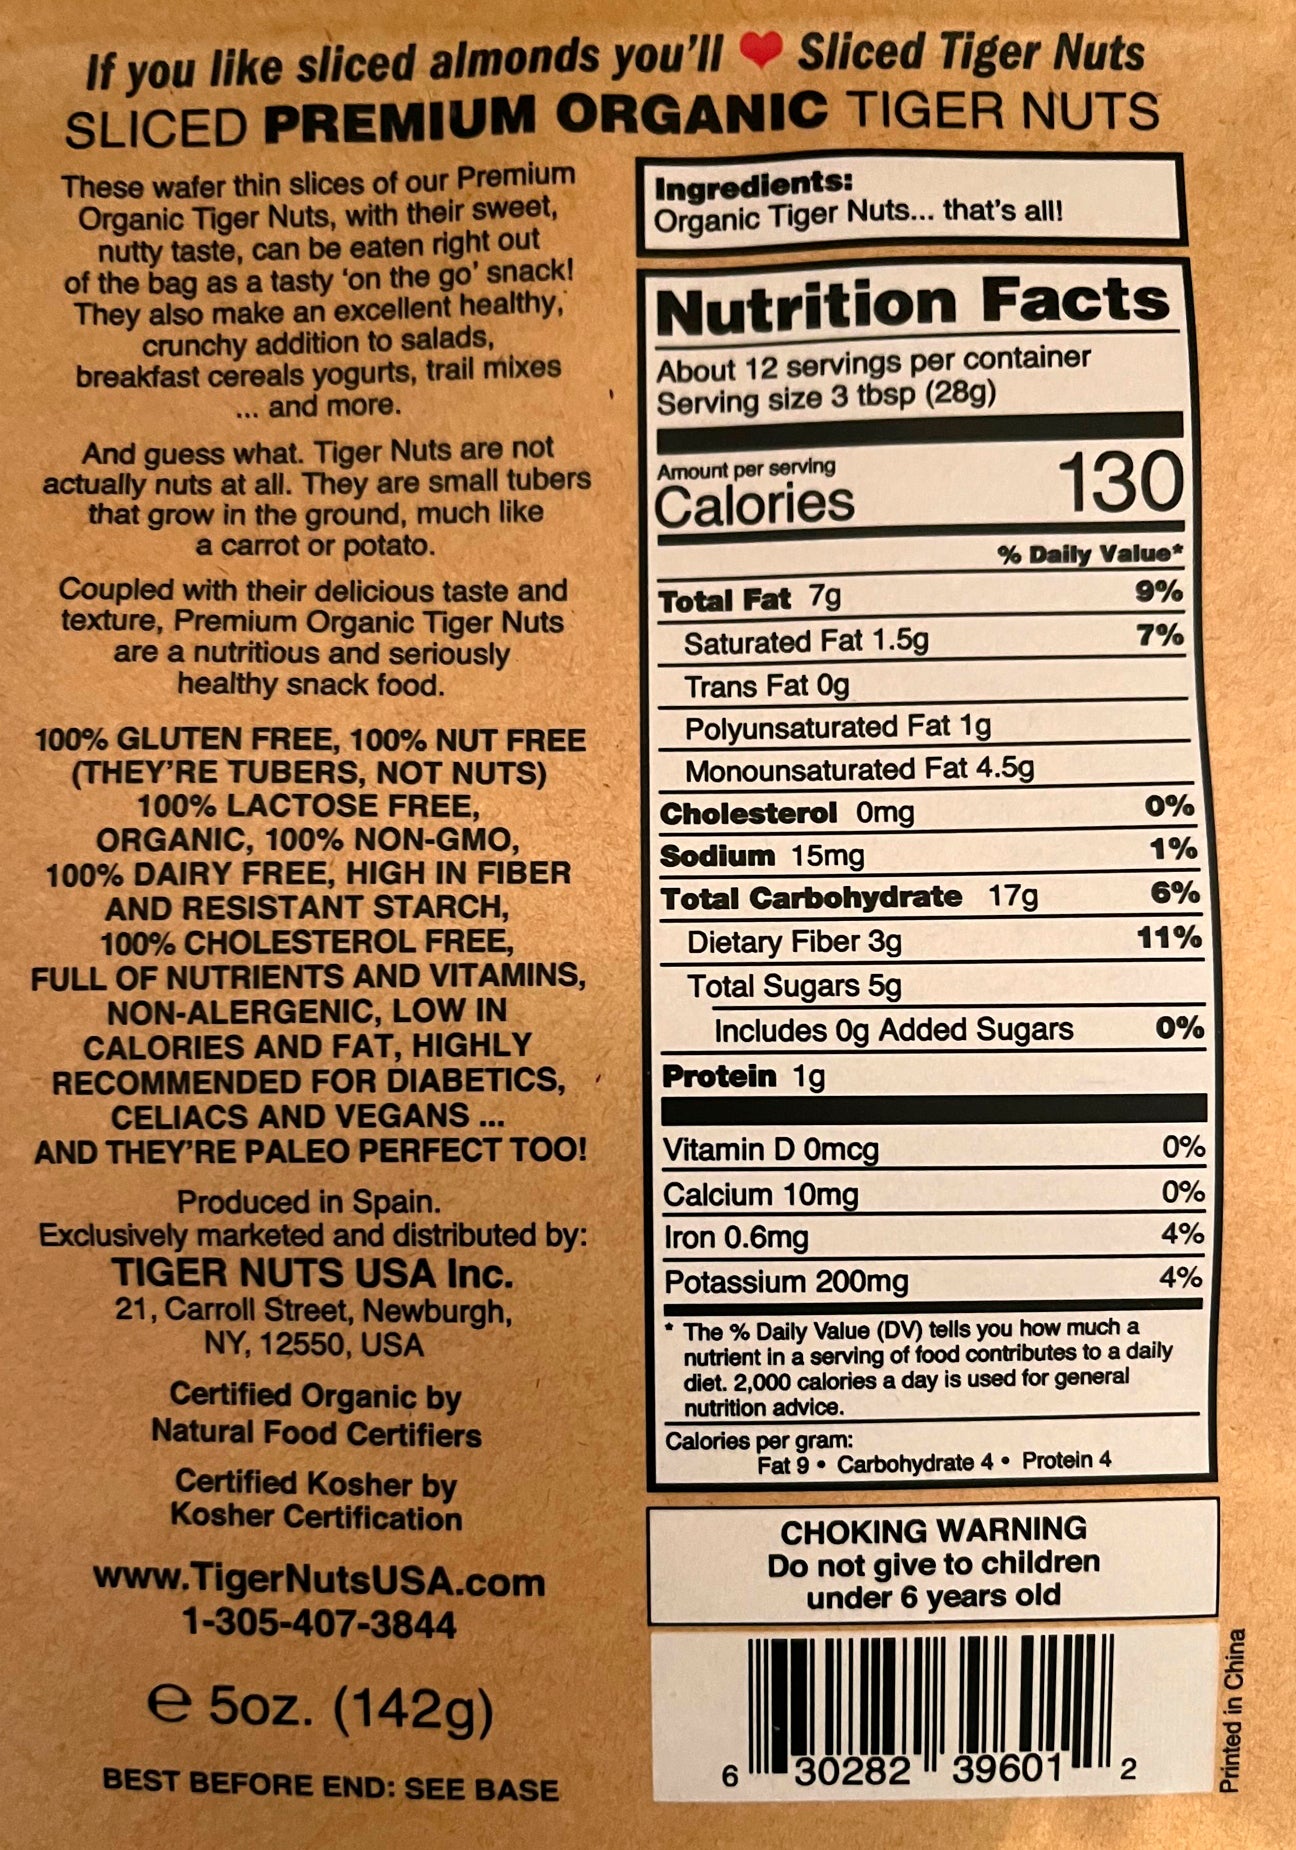 Raw Premium Organic Tiger Nuts in 5 oz bags